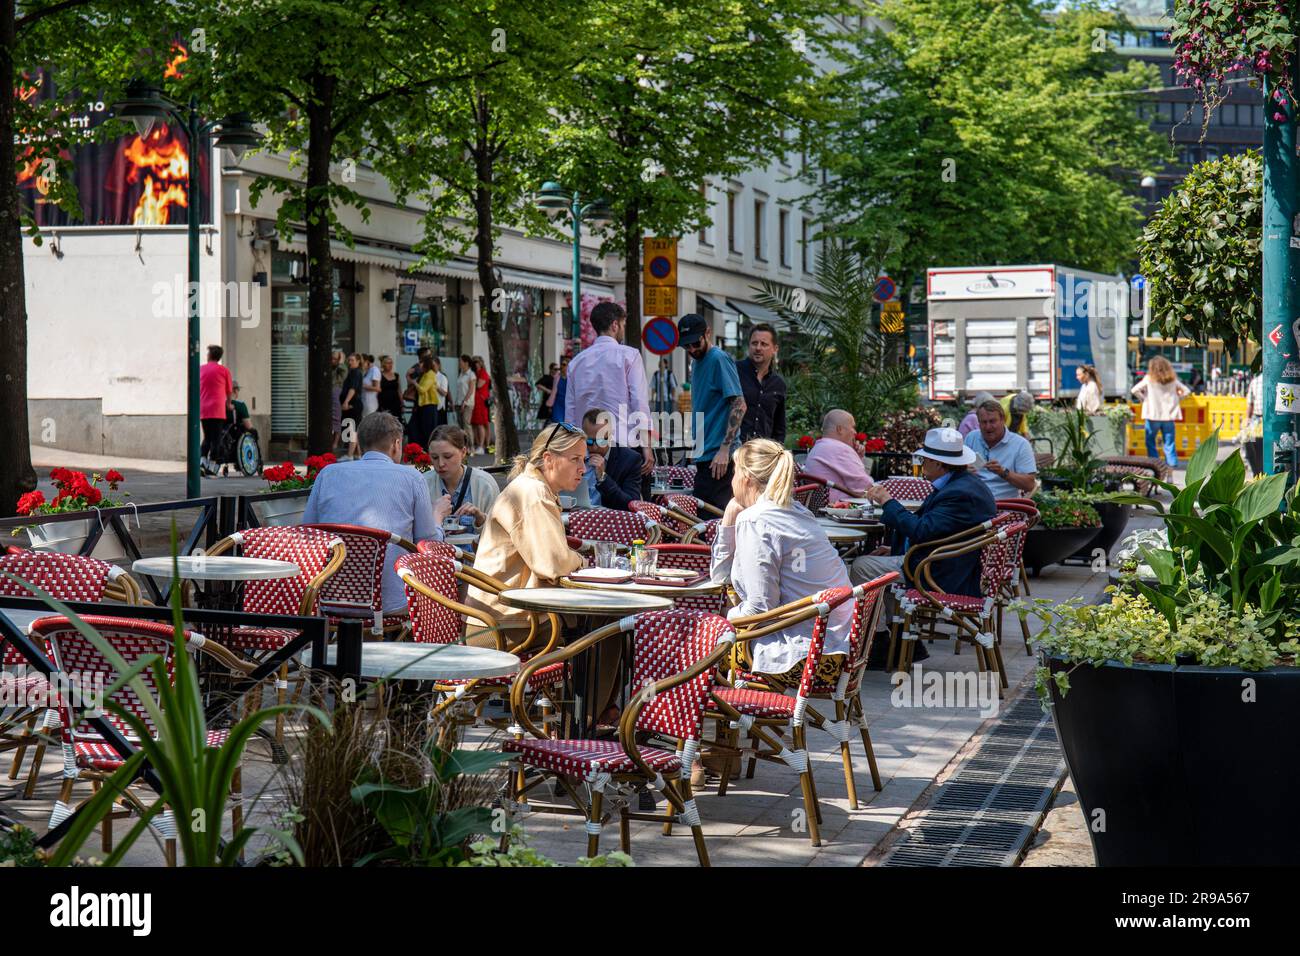 People sitting at café outdoor seating in Pohjoisesplanadi, Helsinki, Finland Stock Photo